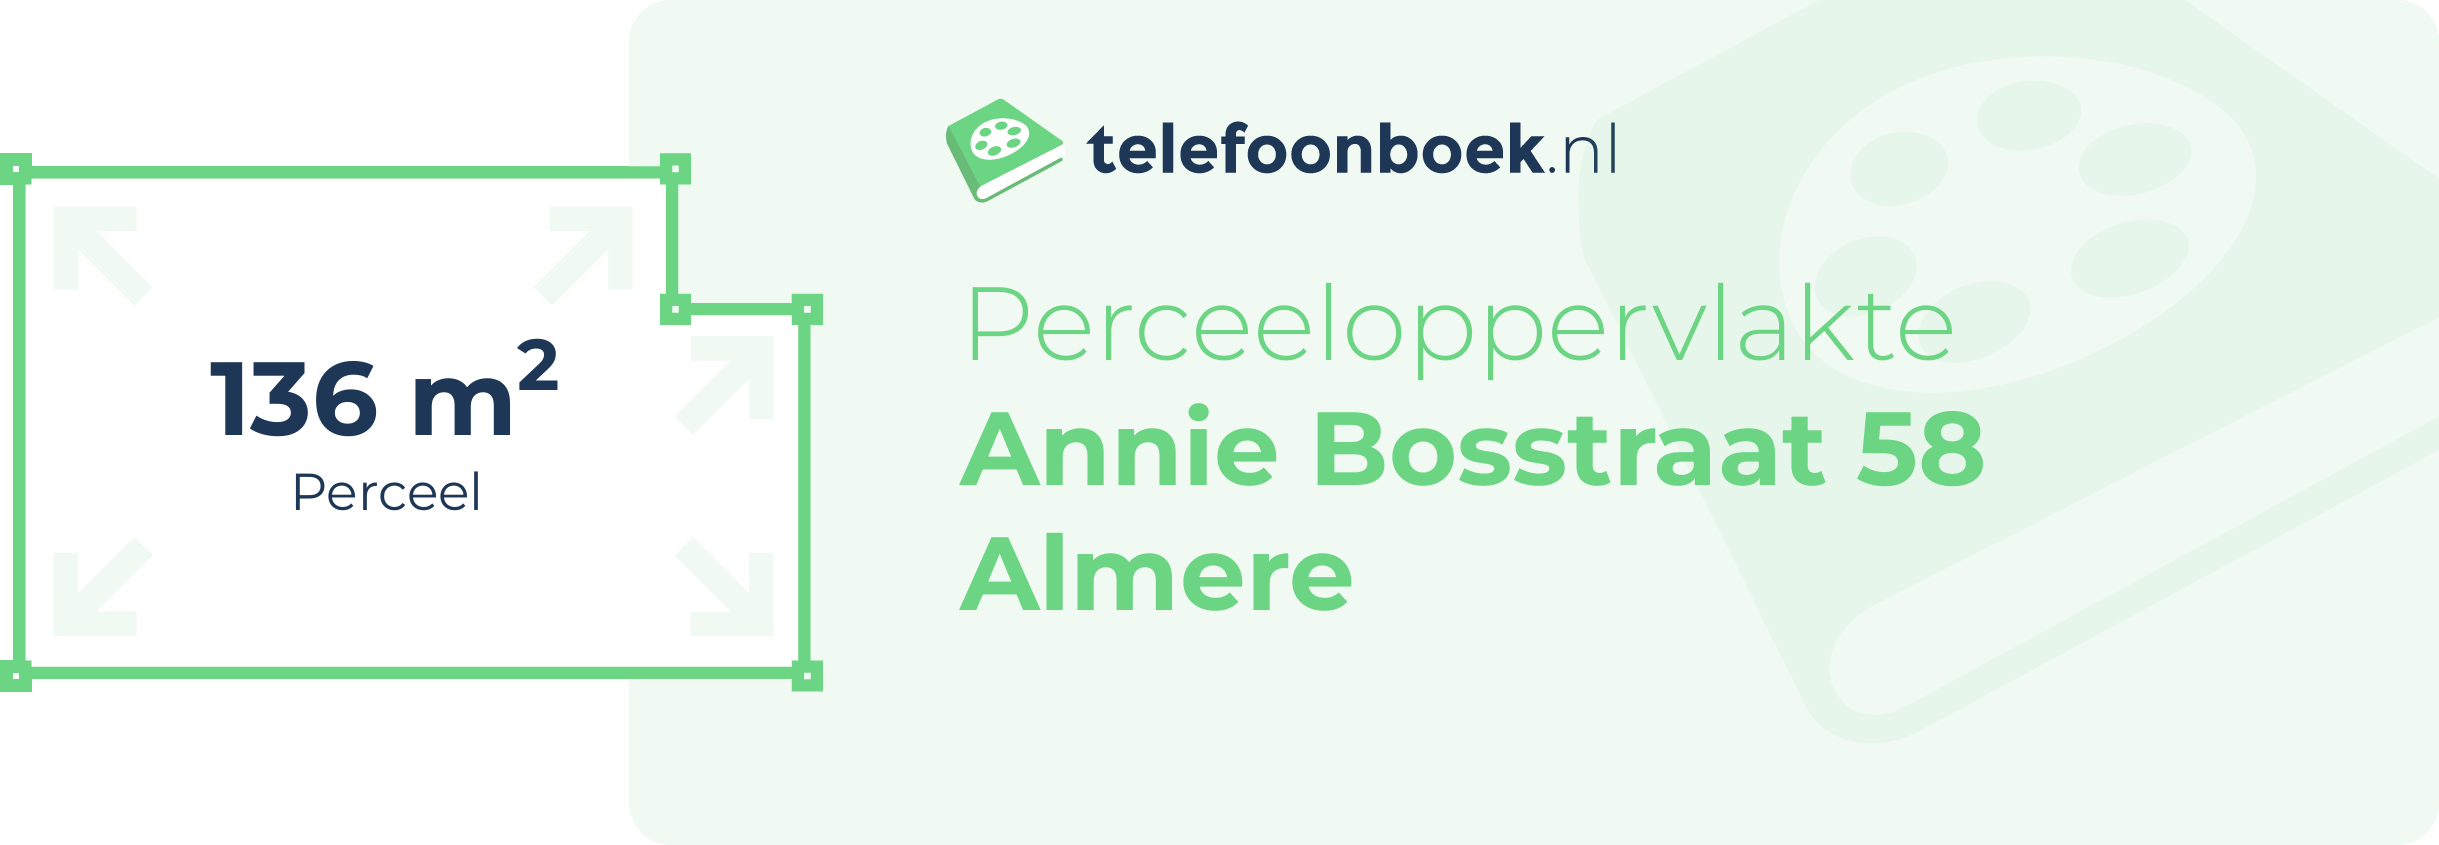 Perceeloppervlakte Annie Bosstraat 58 Almere